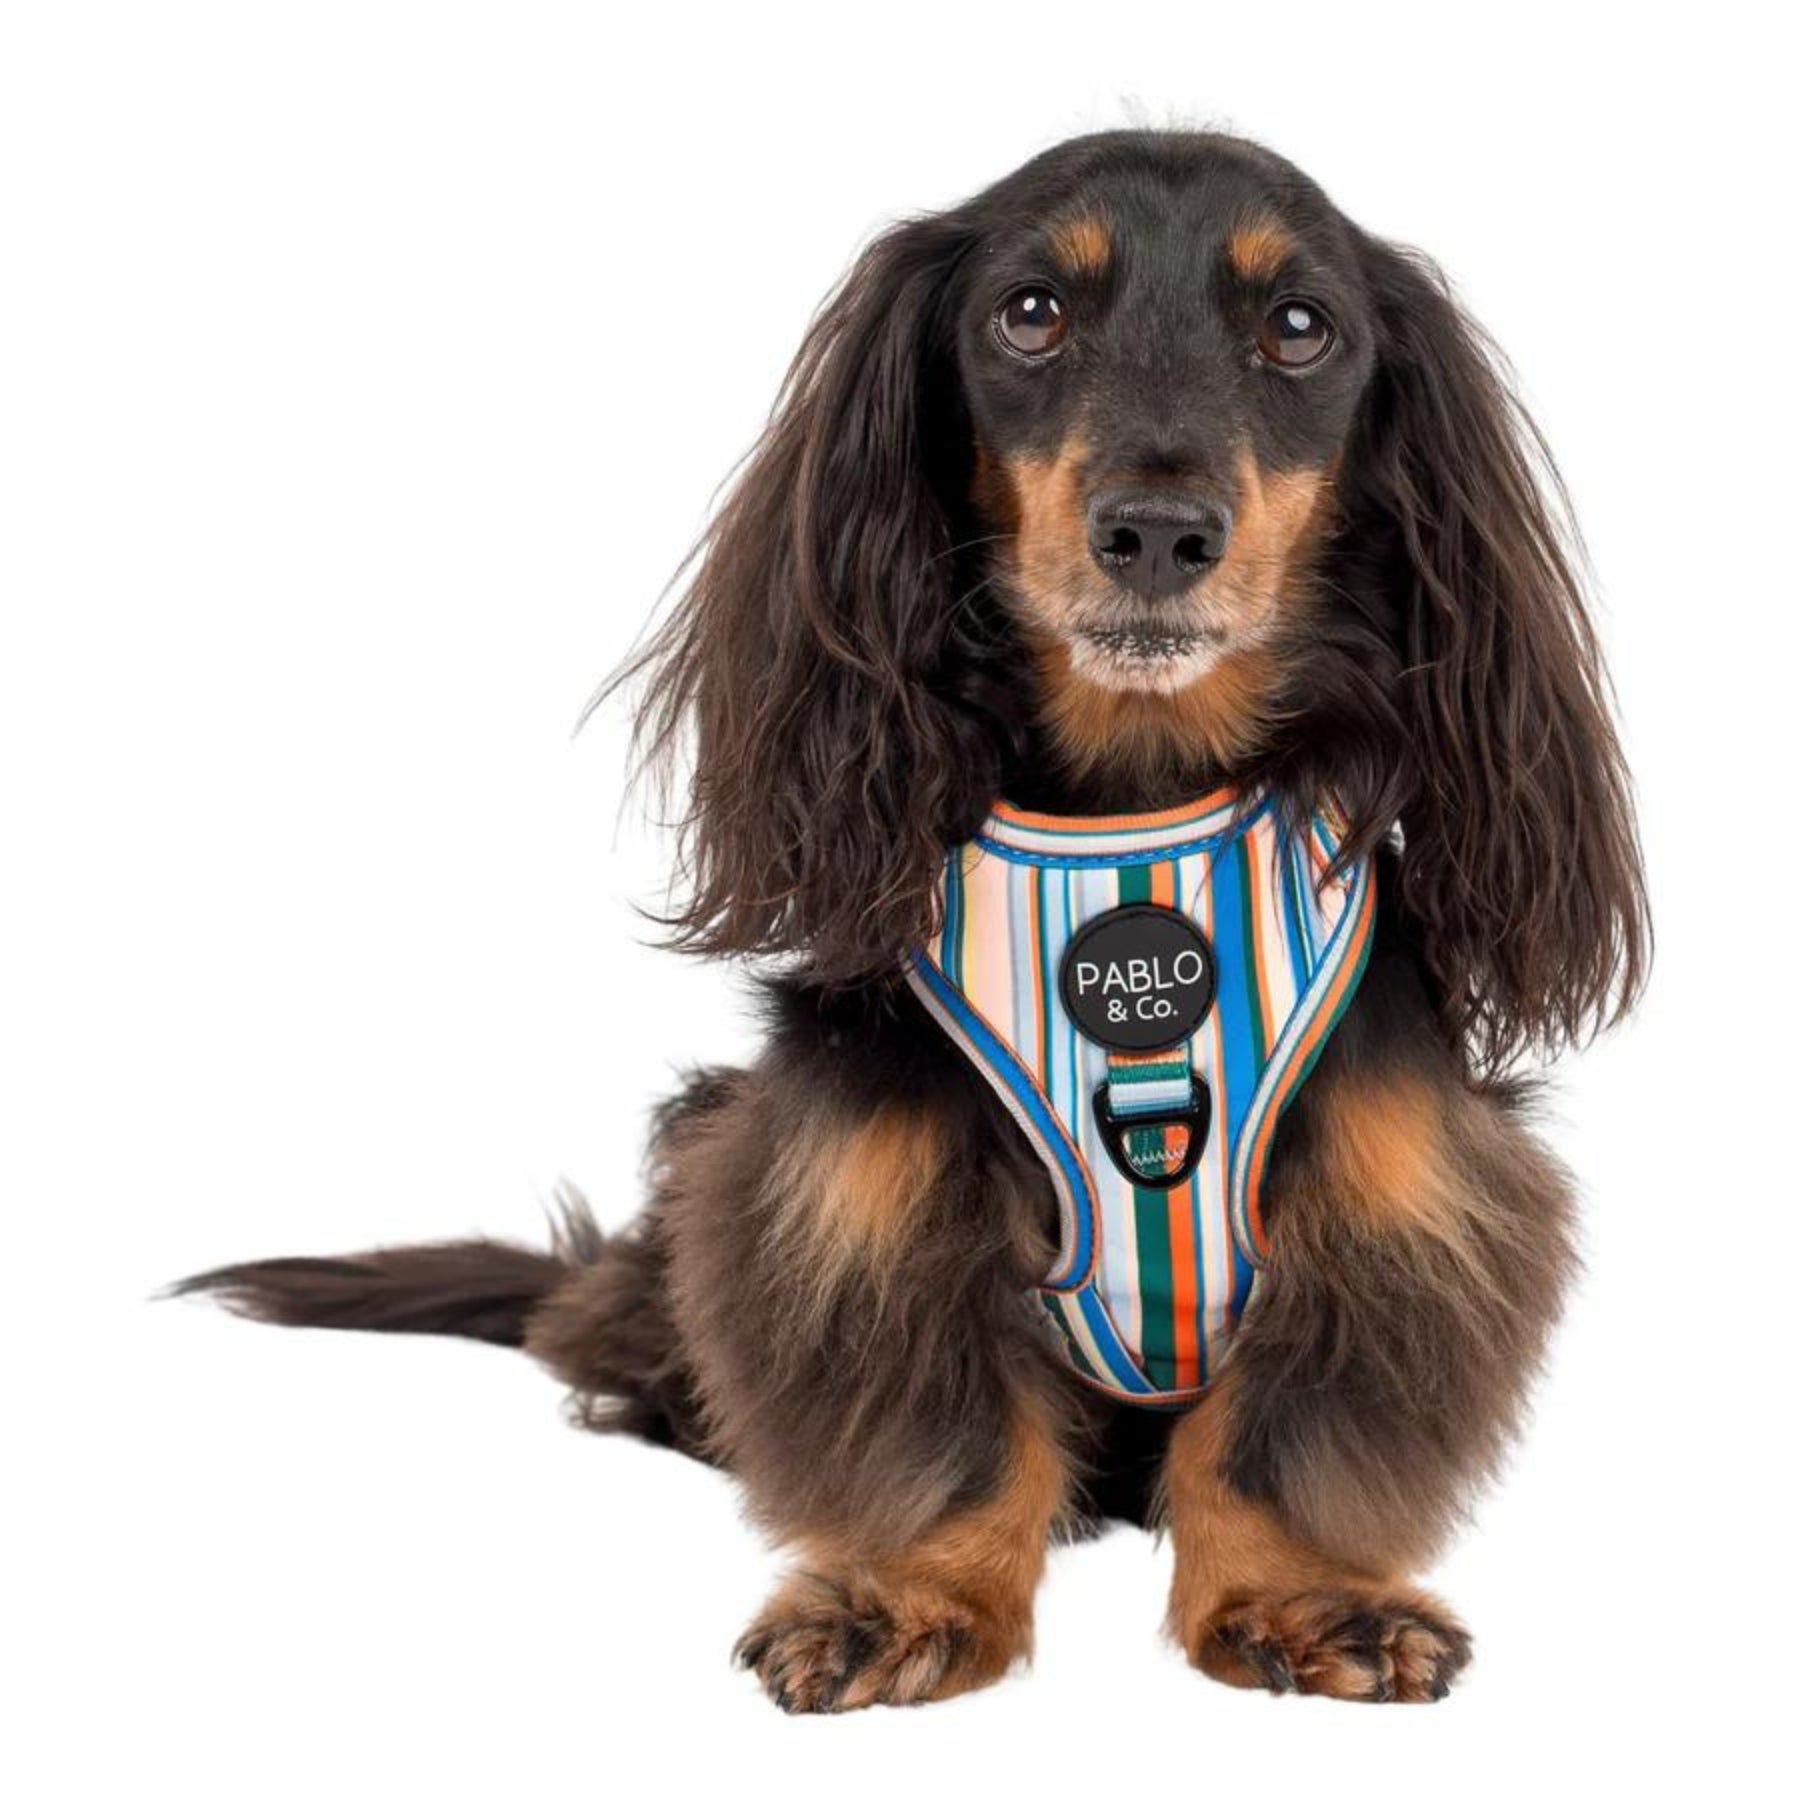 The Cabana Adjustable Dog Harness - Pooch Luxury